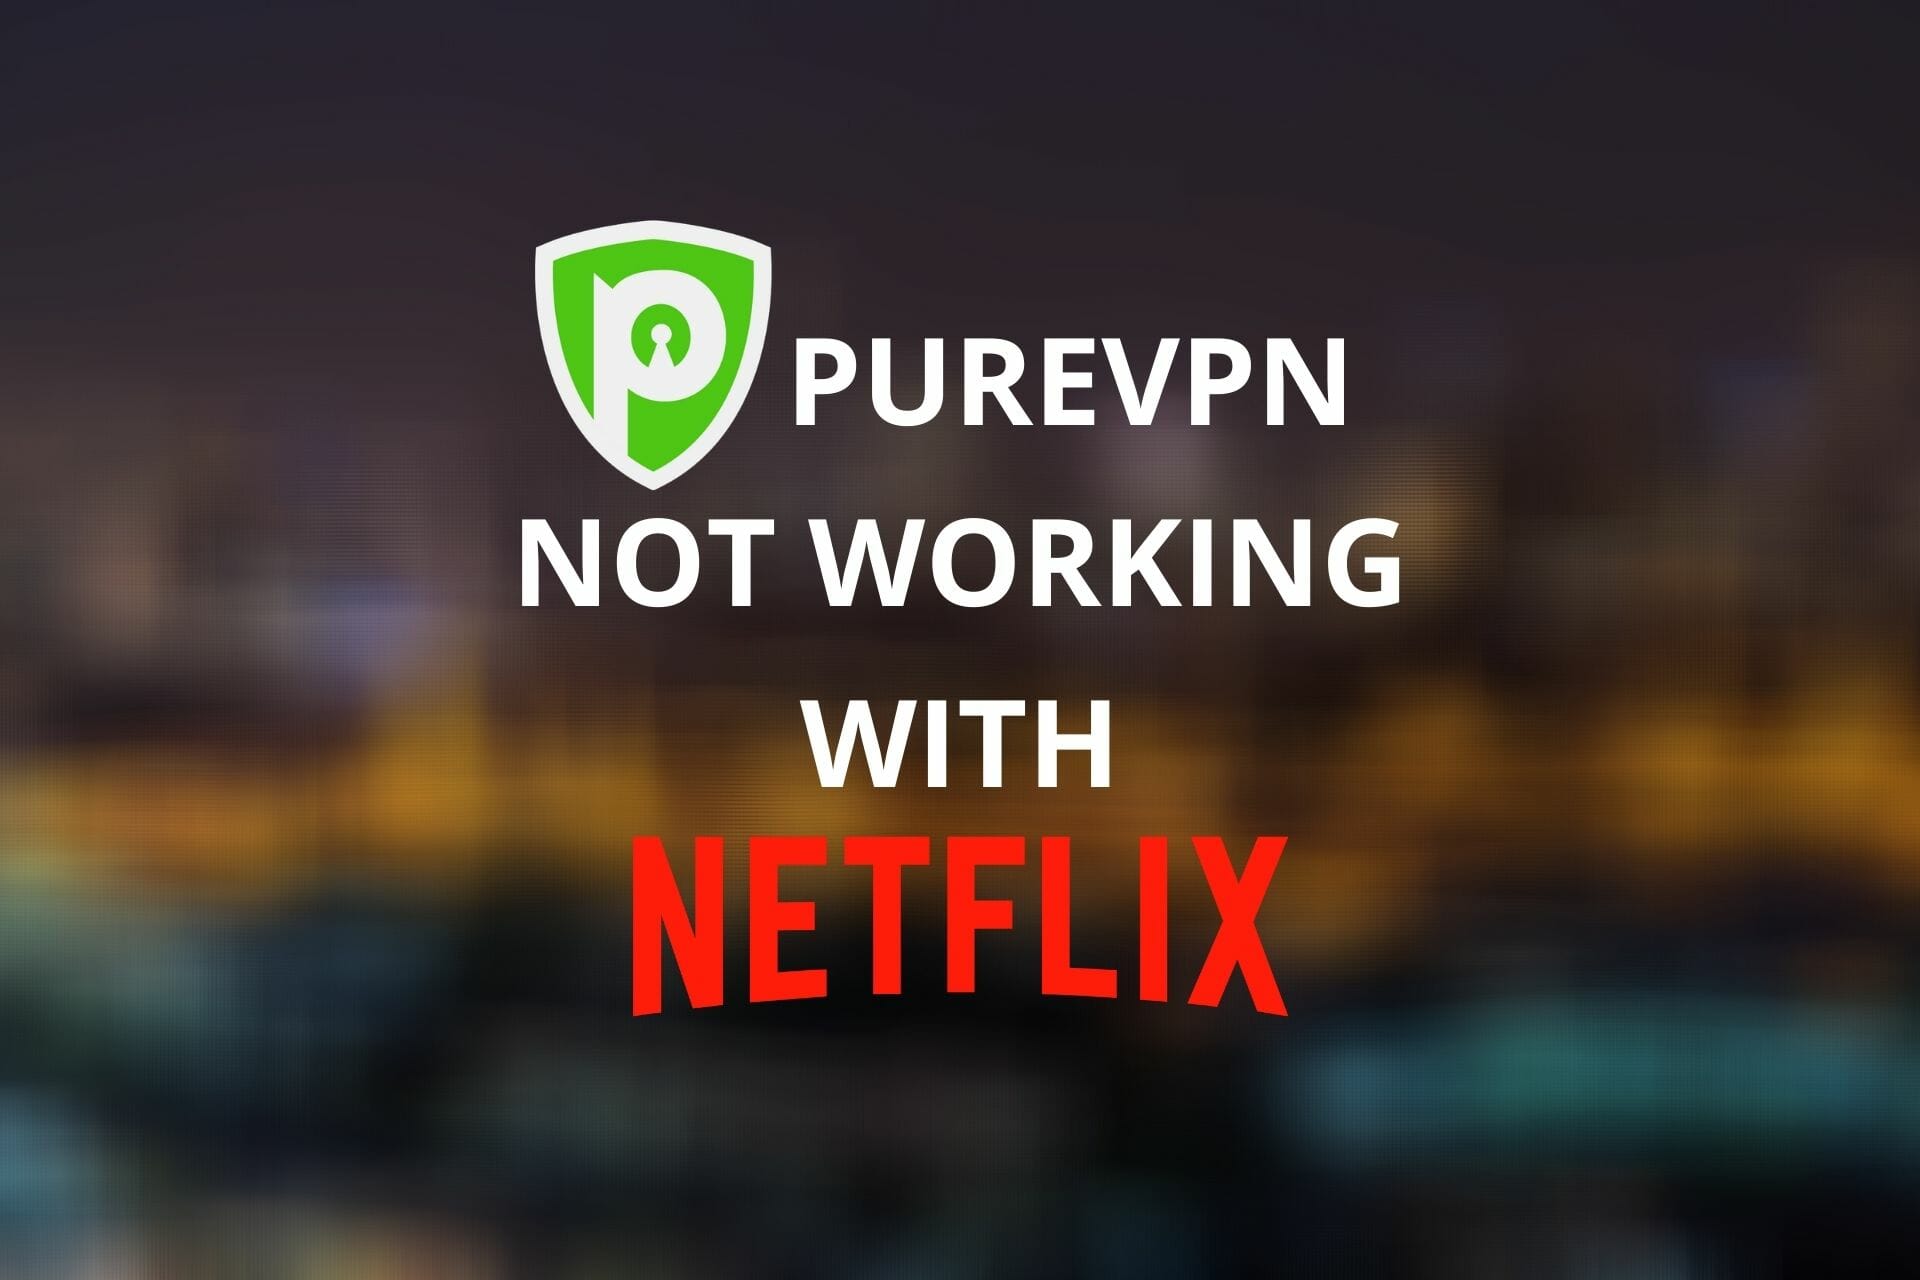 PureVPN not working with Netflix